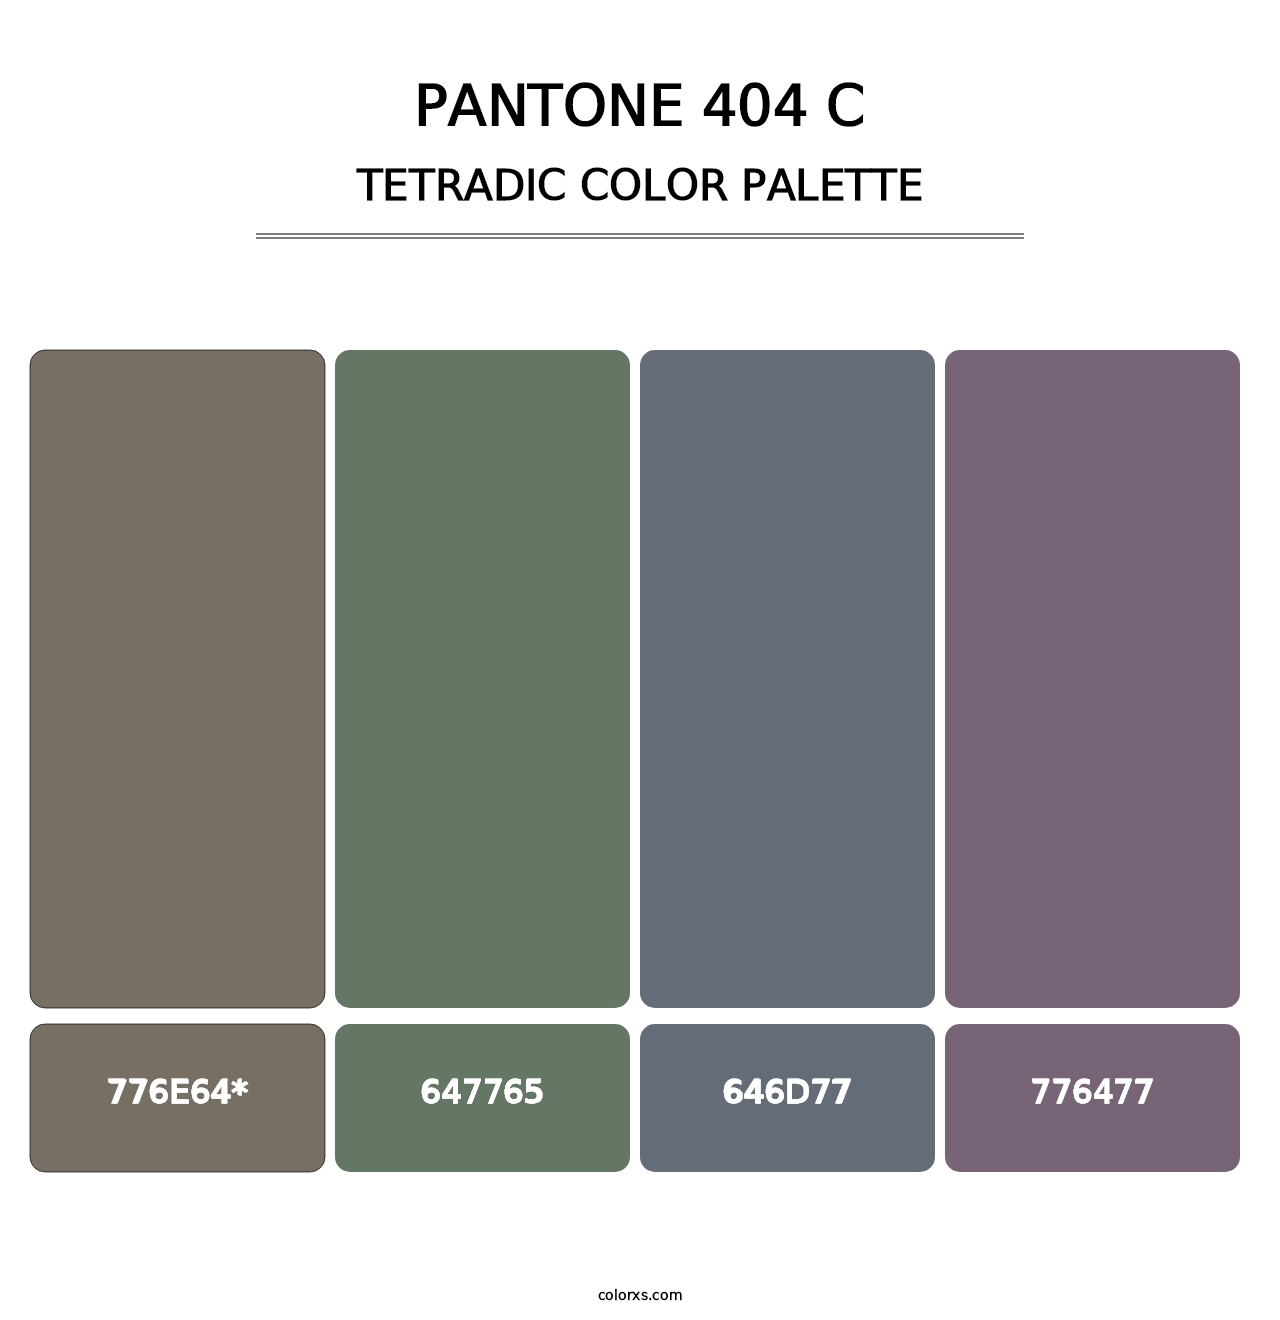 PANTONE 404 C - Tetradic Color Palette